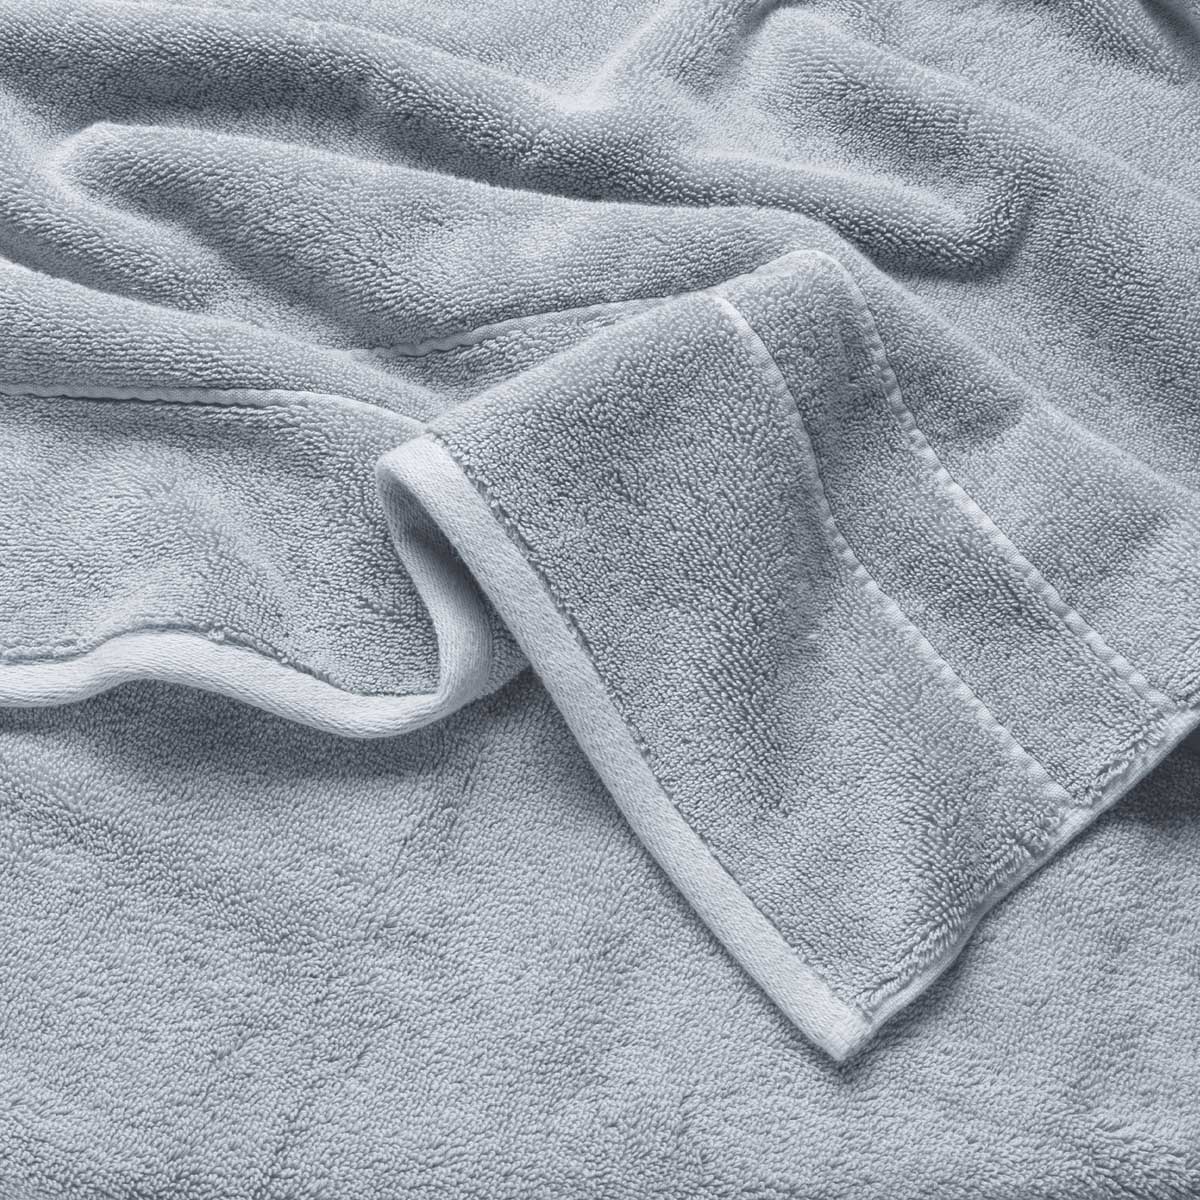 Premium Plush Bath Towel in the color Harbor Mist. Photo of Harbor Mist Premium Plush Bath Towel taken as a close up only showing the Premium Plush Bath Towel 